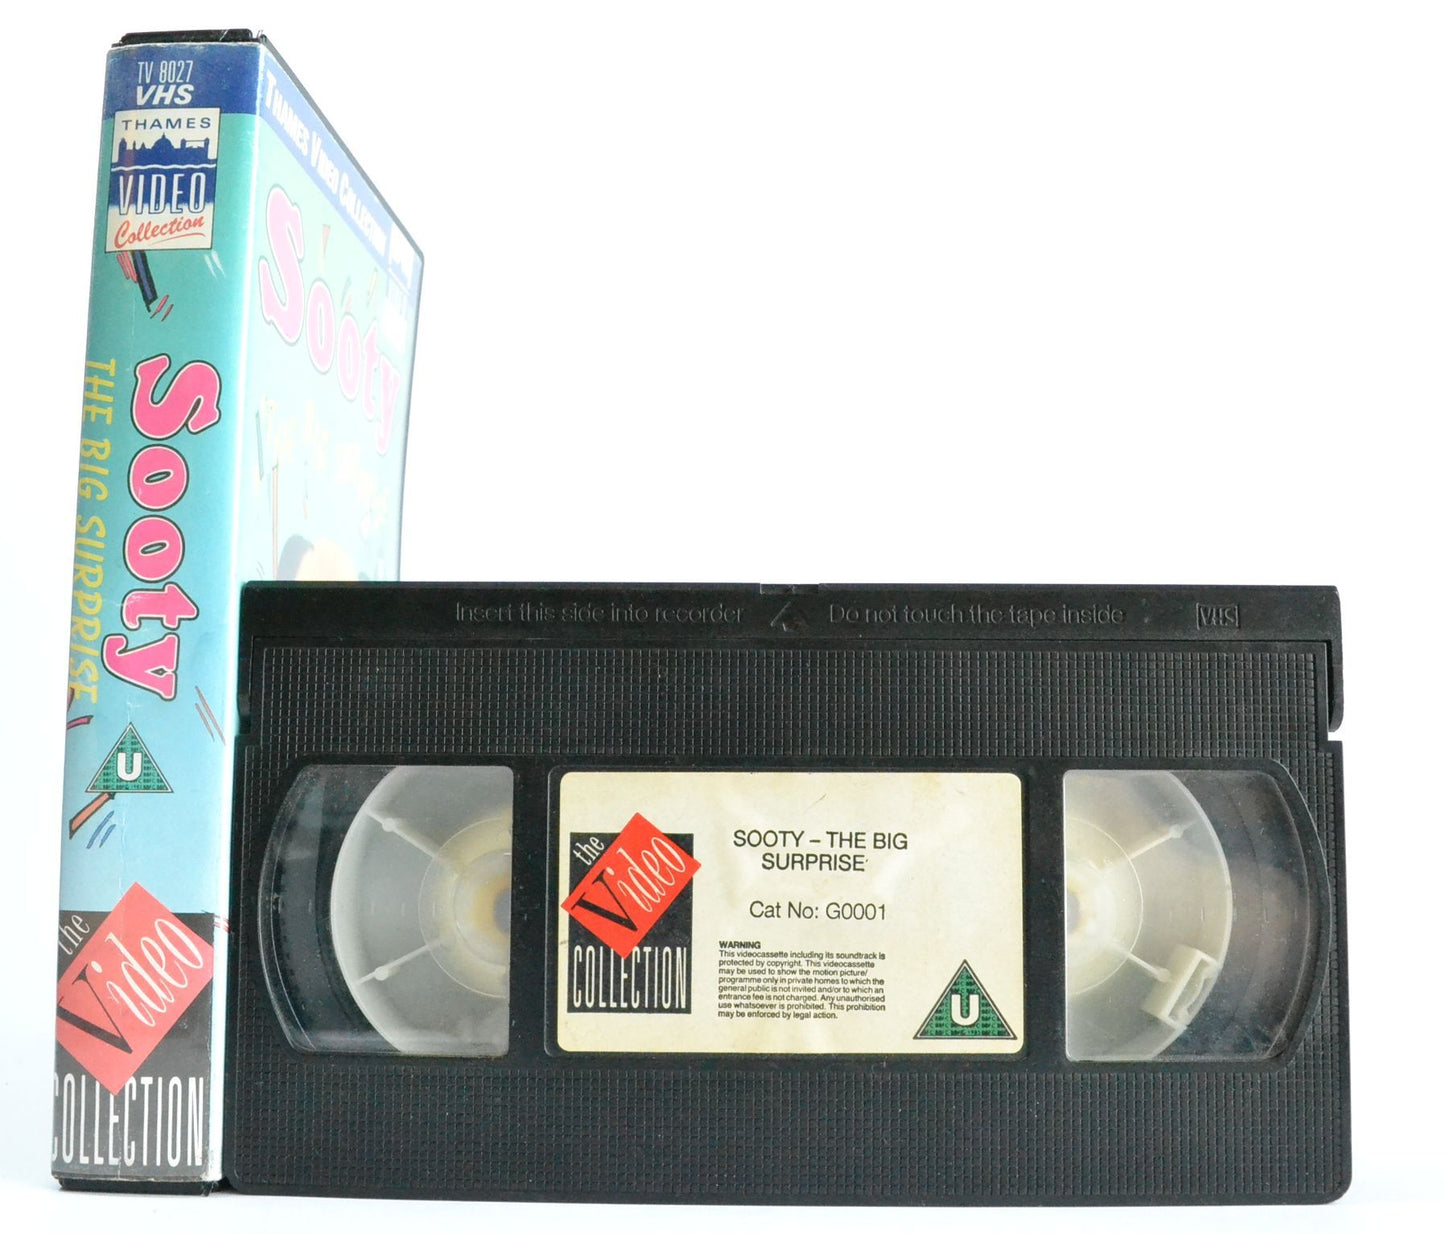 Sooty: The Big Surprise [Sweep & Soo] - Matthew Corbett - (1988) Thames - VHS-